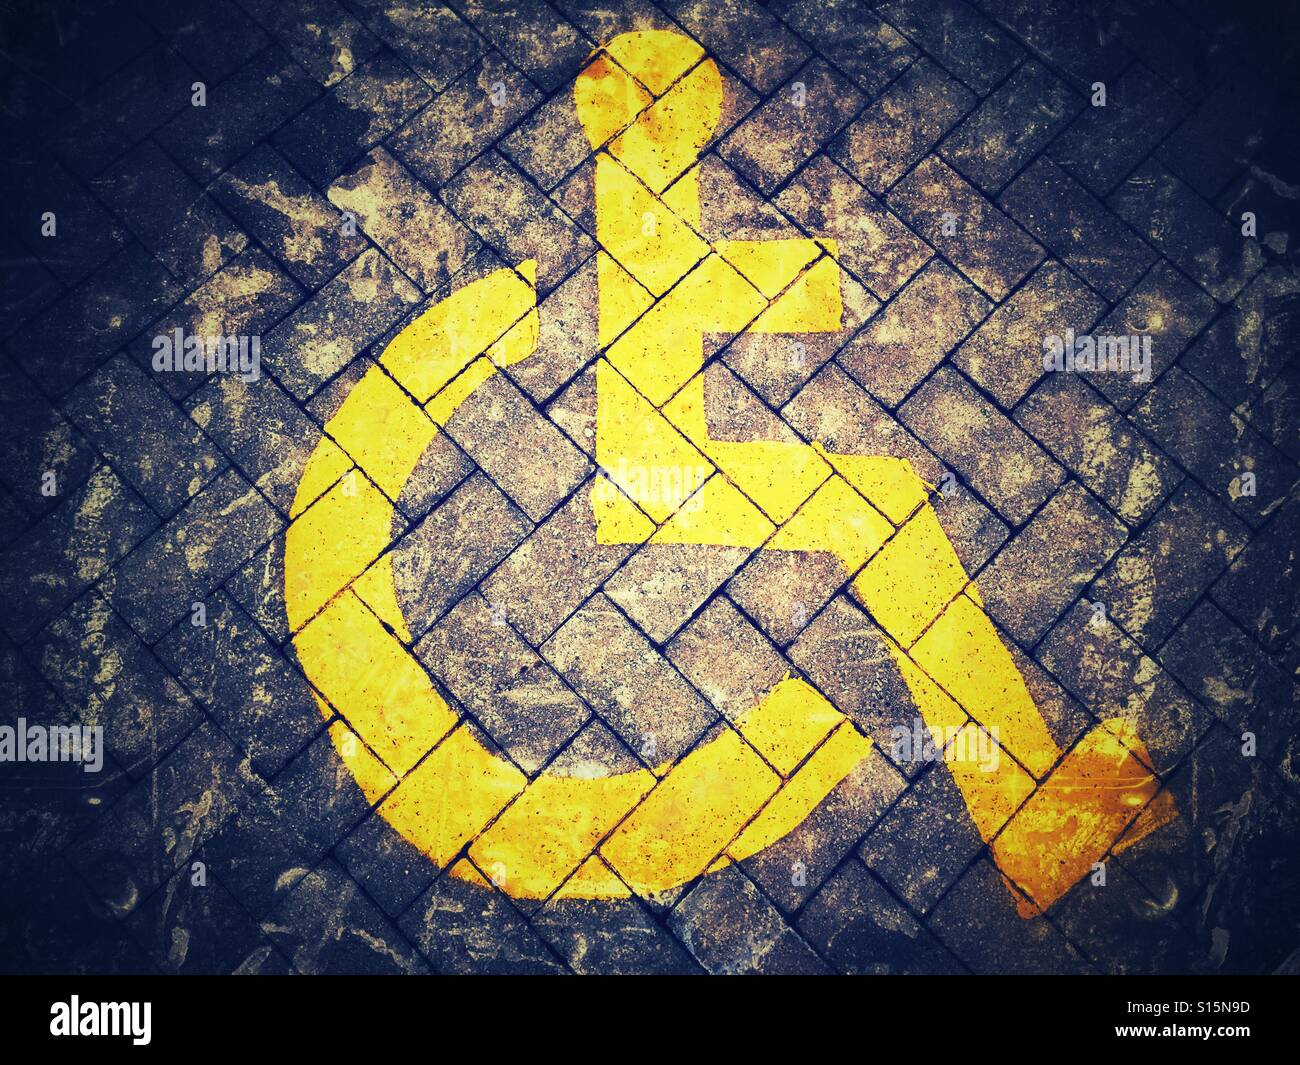 Bright yellow wheelchair symbol painted on dark background Stock Photo